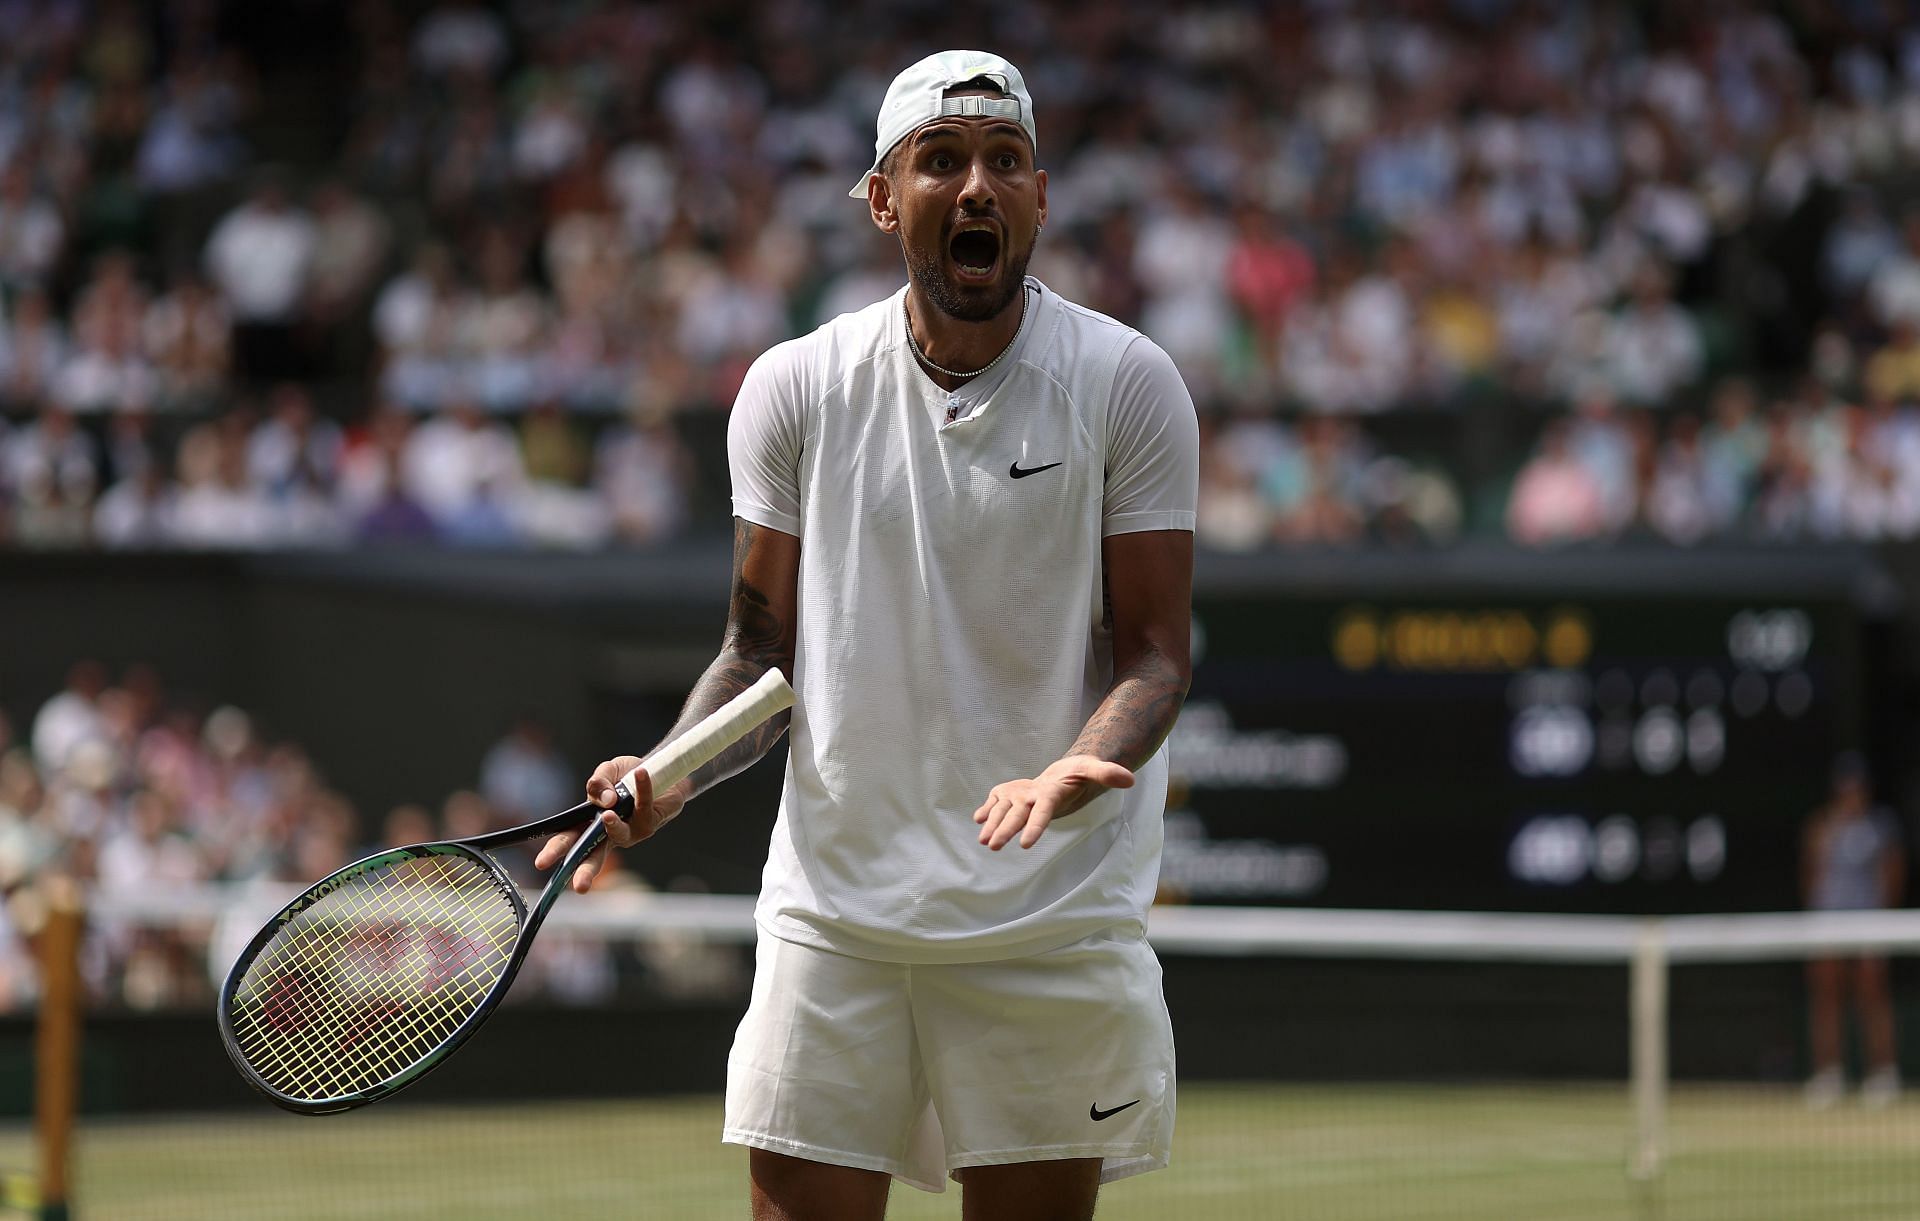 Nick Kyrgios played his only Grand Slam singles final at Wimbledon 2022